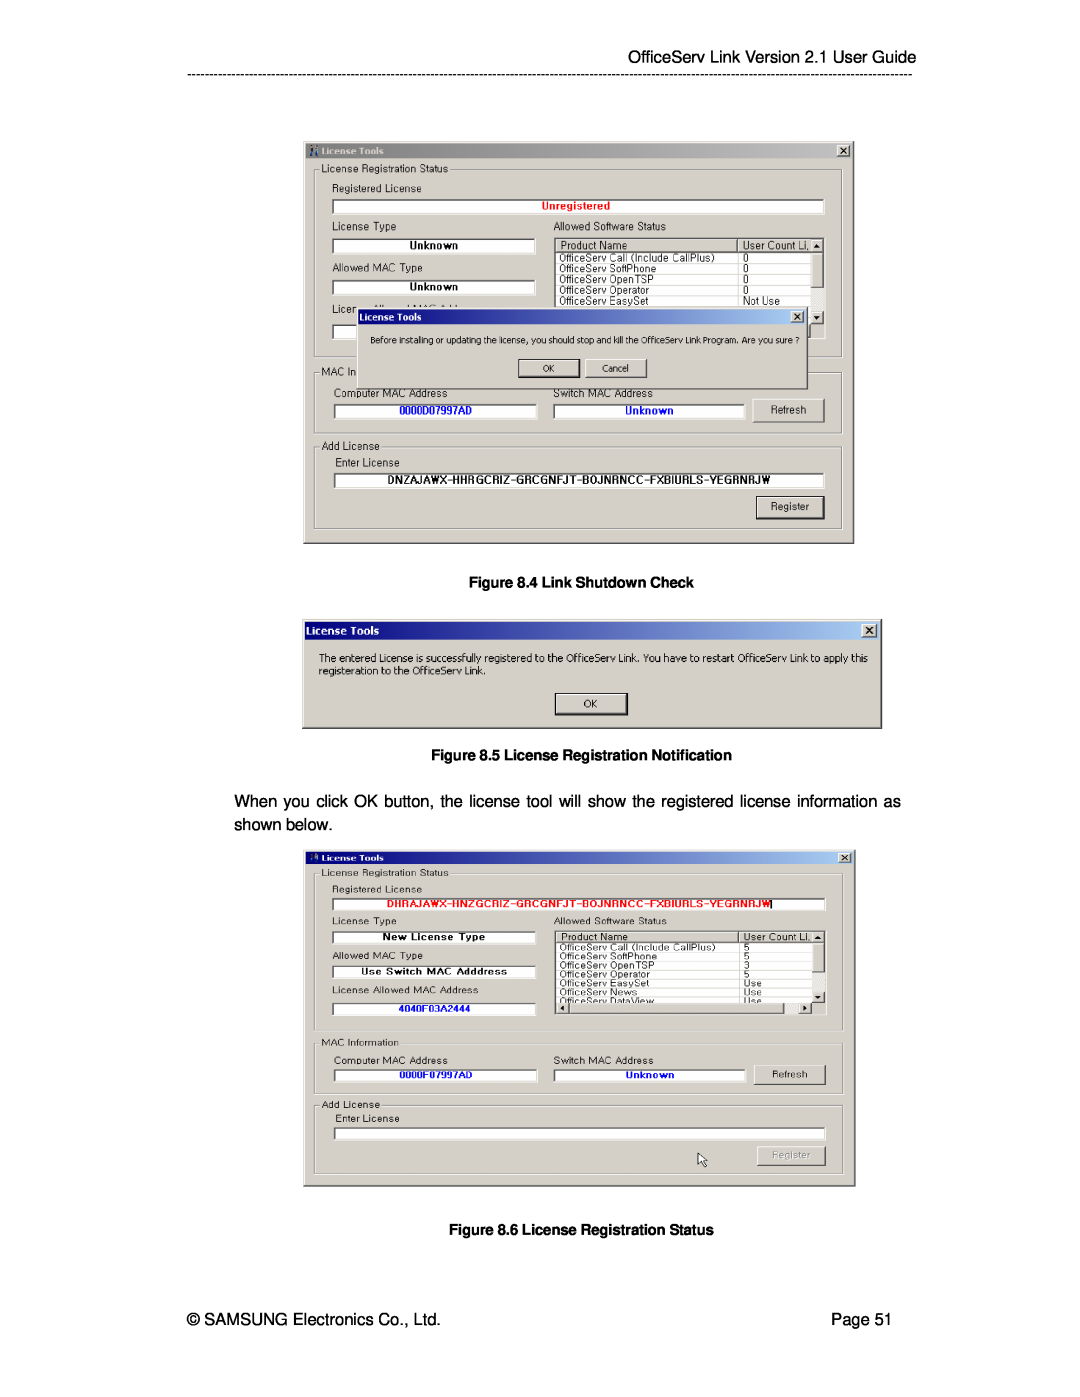 Samsung manual OfficeServ Link Version 2.1 User Guide, Page, 4 Link Shutdown Check, 5 License Registration Notification 